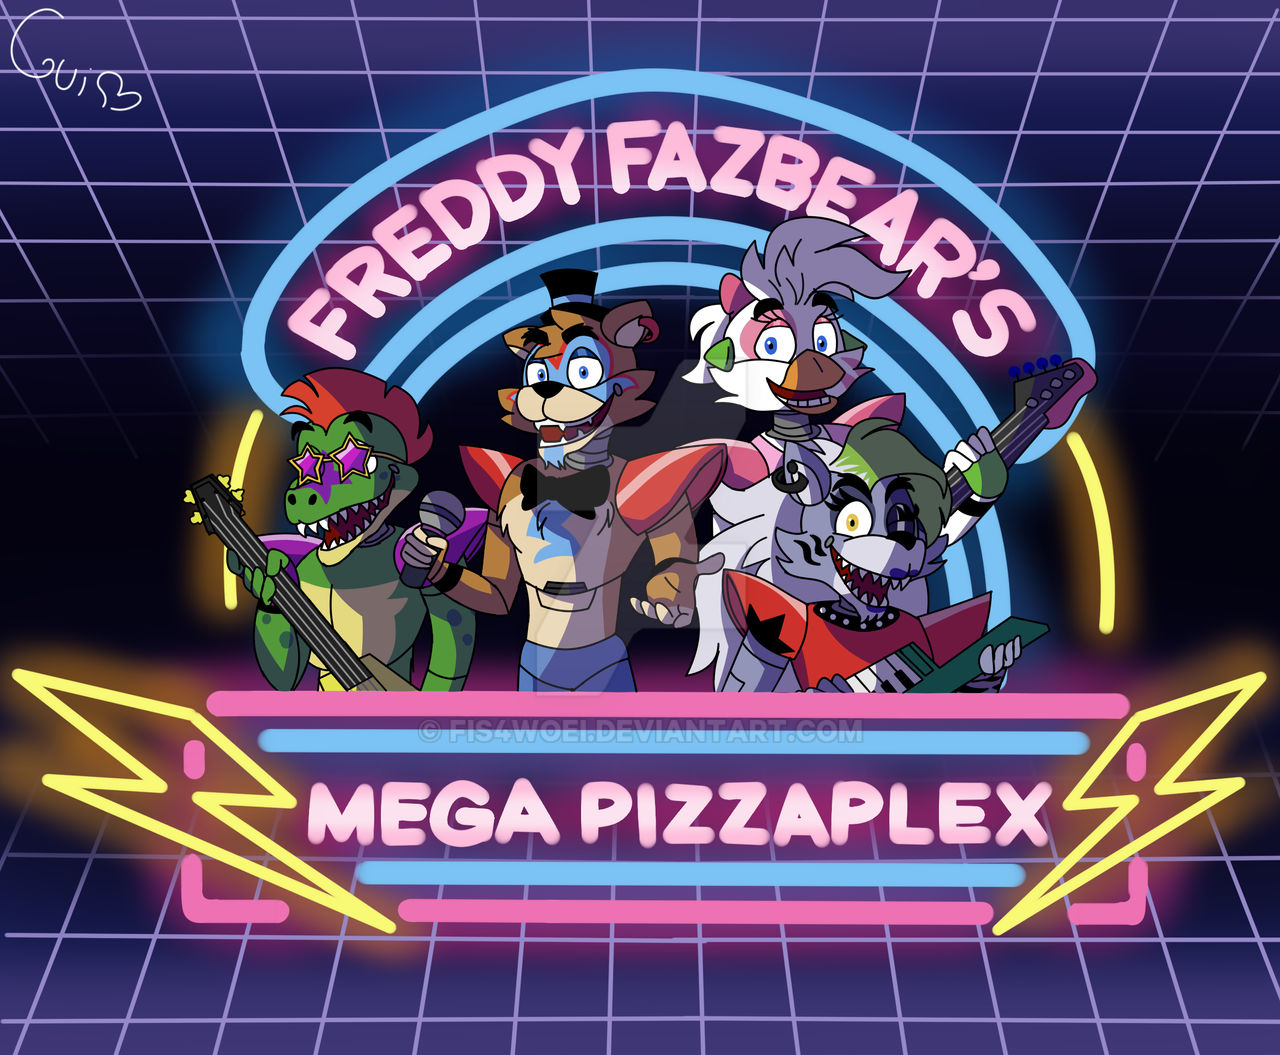 FNAF - Freddy Fazbear Pizza Menu by TeamChelsea on DeviantArt